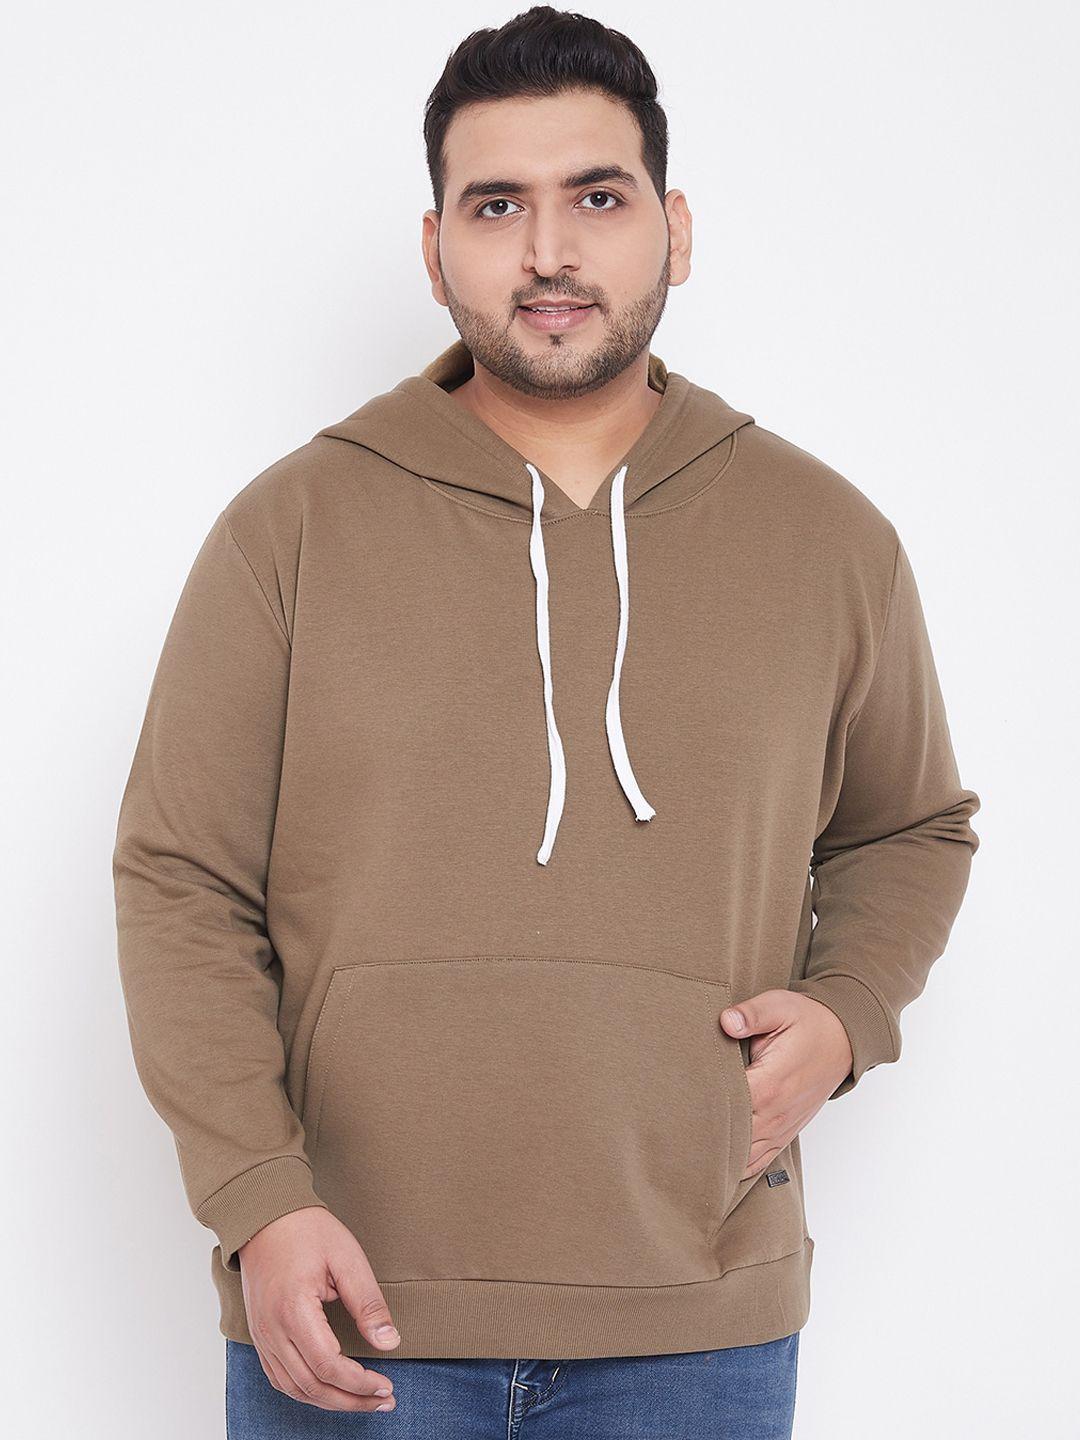 instafab-plus-men-camel-brown-solid-sweatshirt